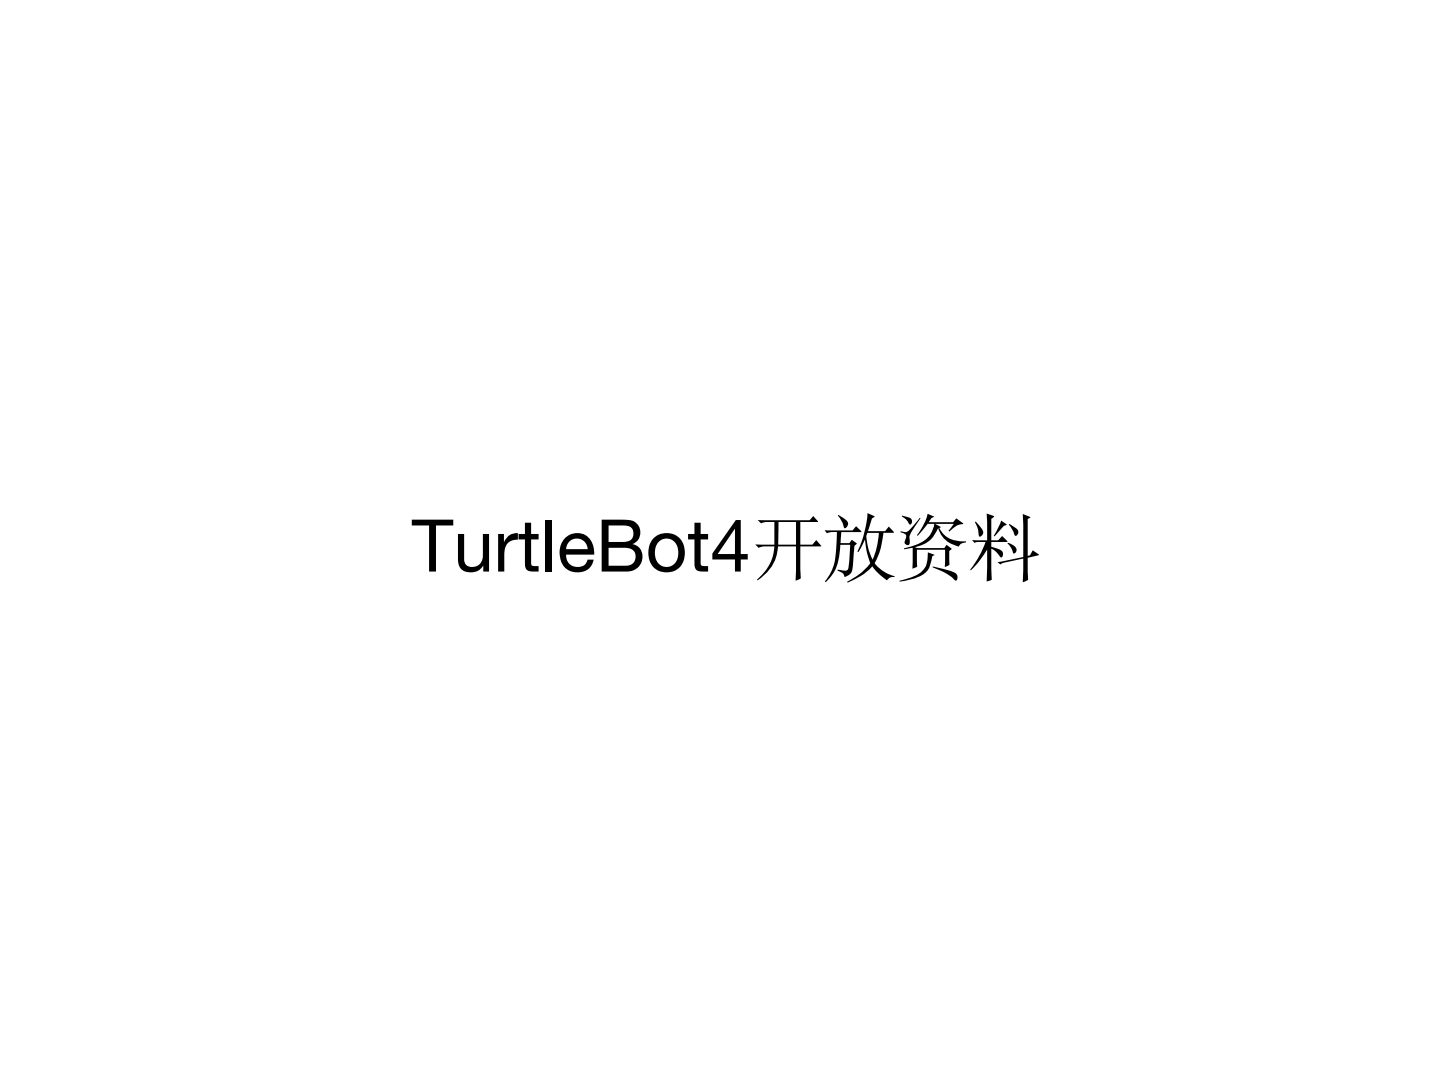 Turtlebot4-JT第三版_32.png